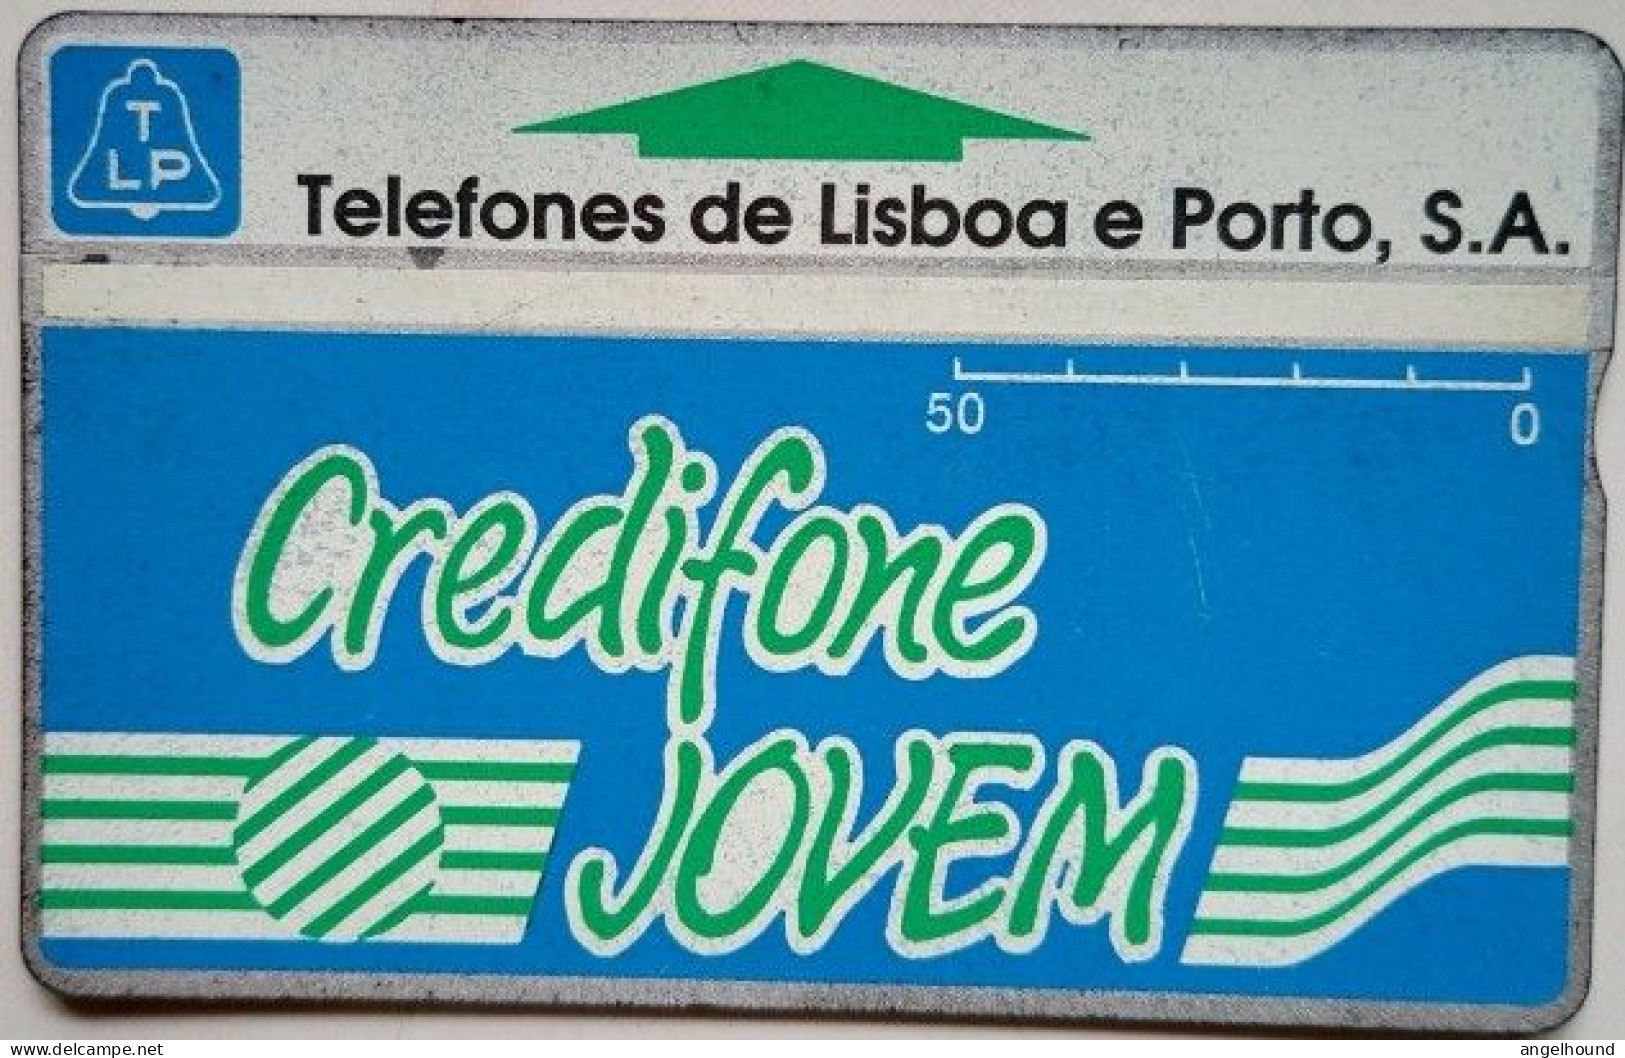 Portugal 50 Units " Credifone Jovem " - Portugal